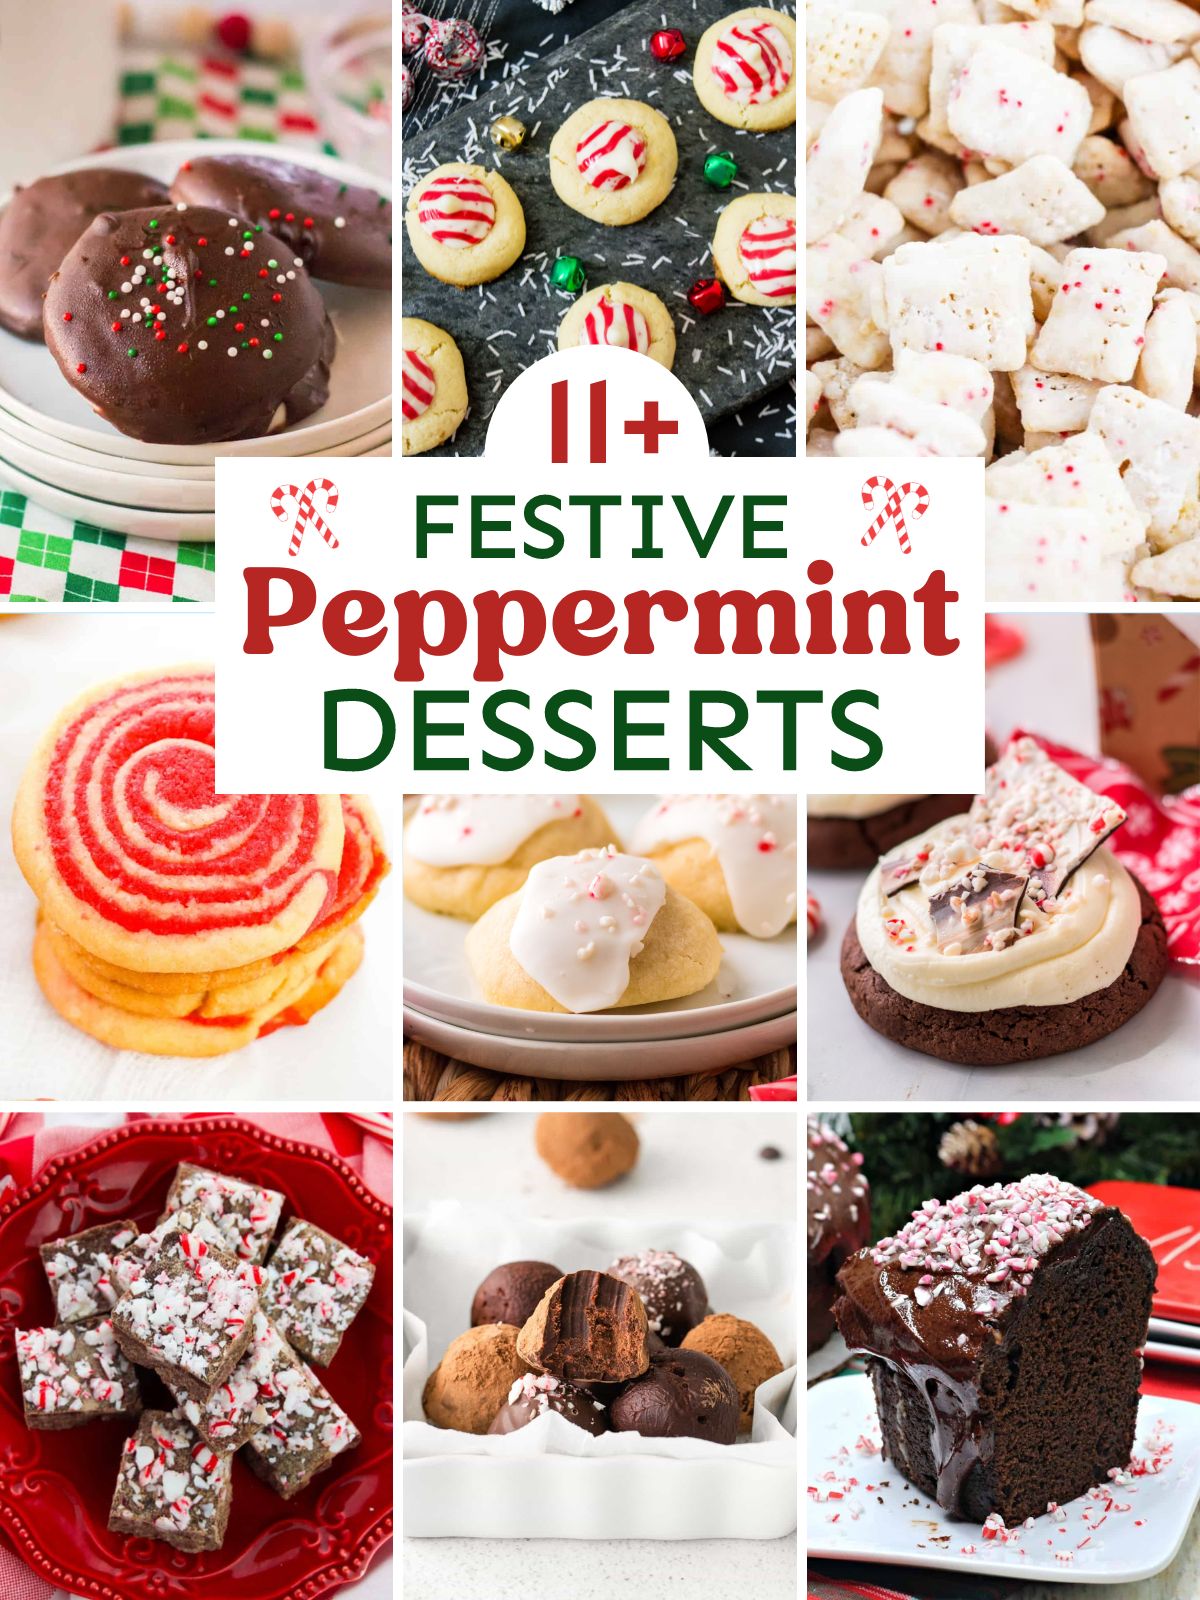 11+ Festive Peppermint Desserts.